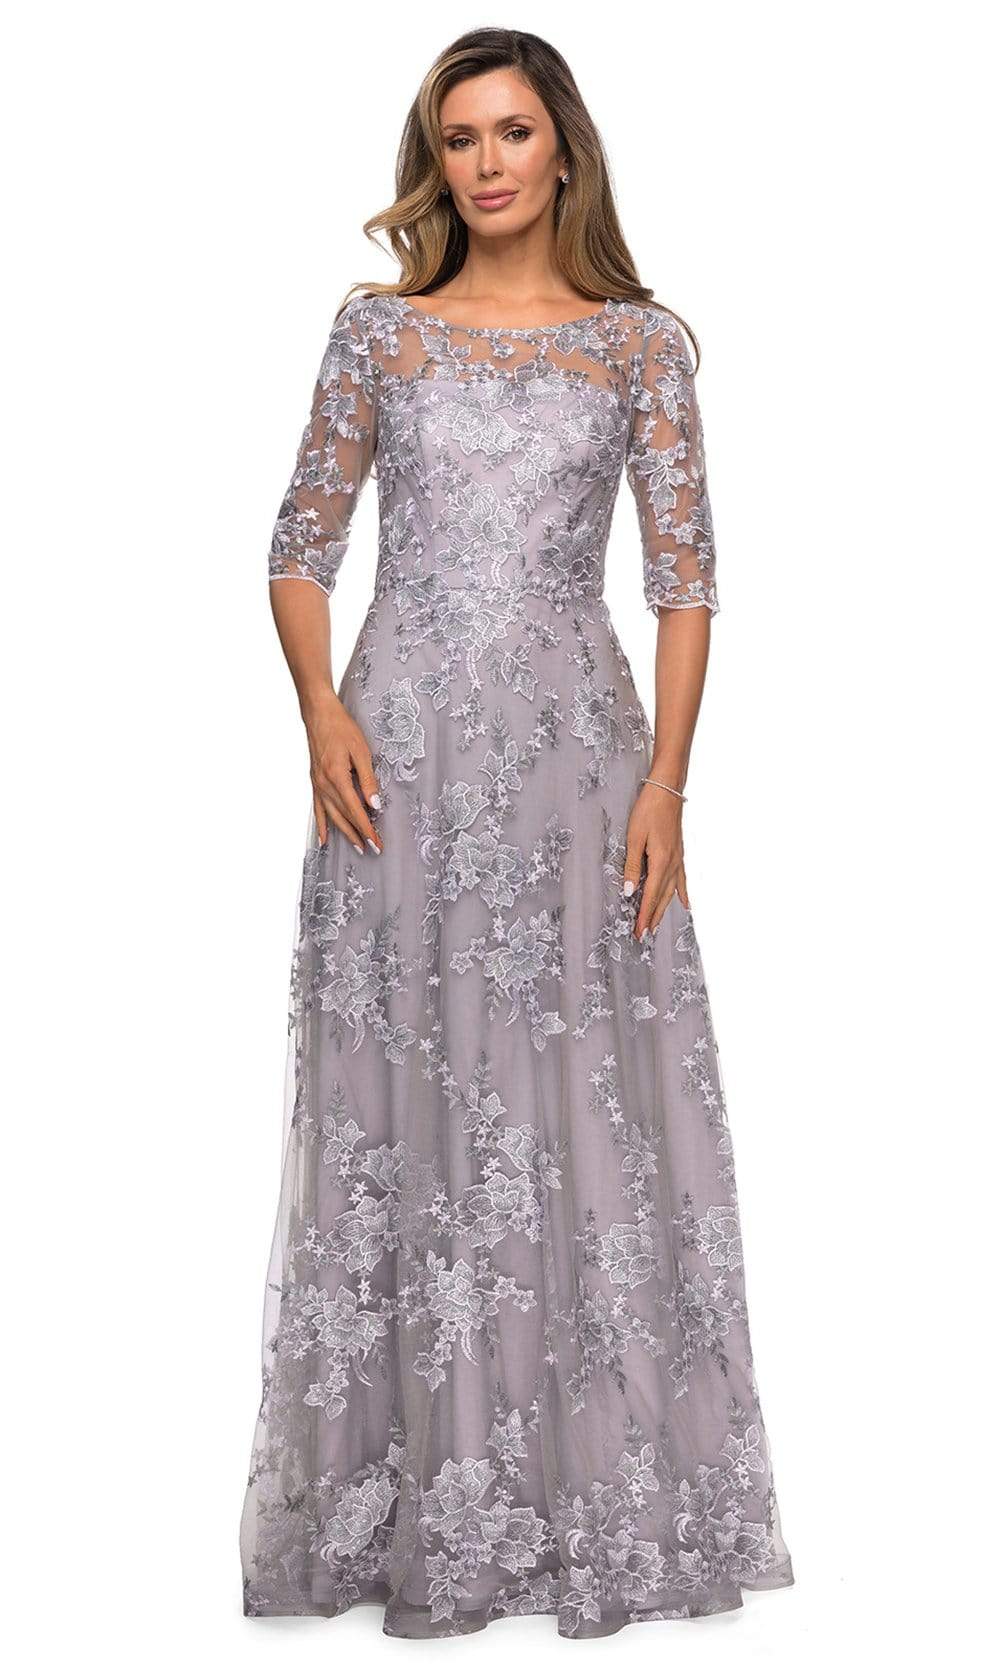 La Femme - 27854 Embroidered Lace Quarter Sleeve A-Line Dress
